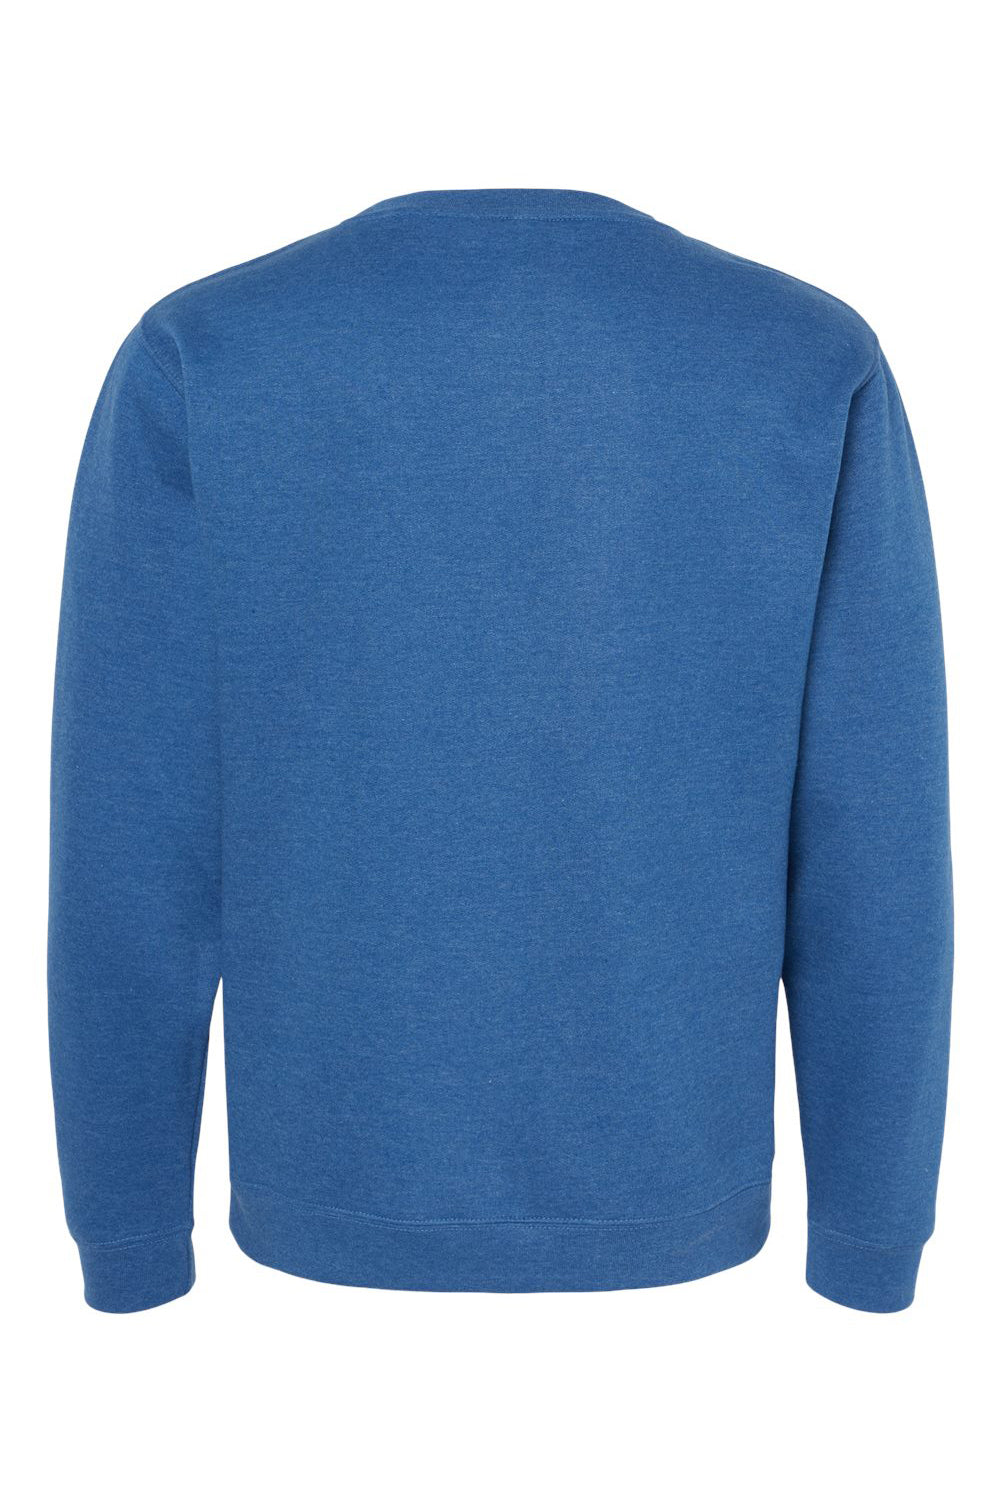 Independent Trading Co. SS3000 Mens Crewneck Sweatshirt Heather Royal Blue Flat Back